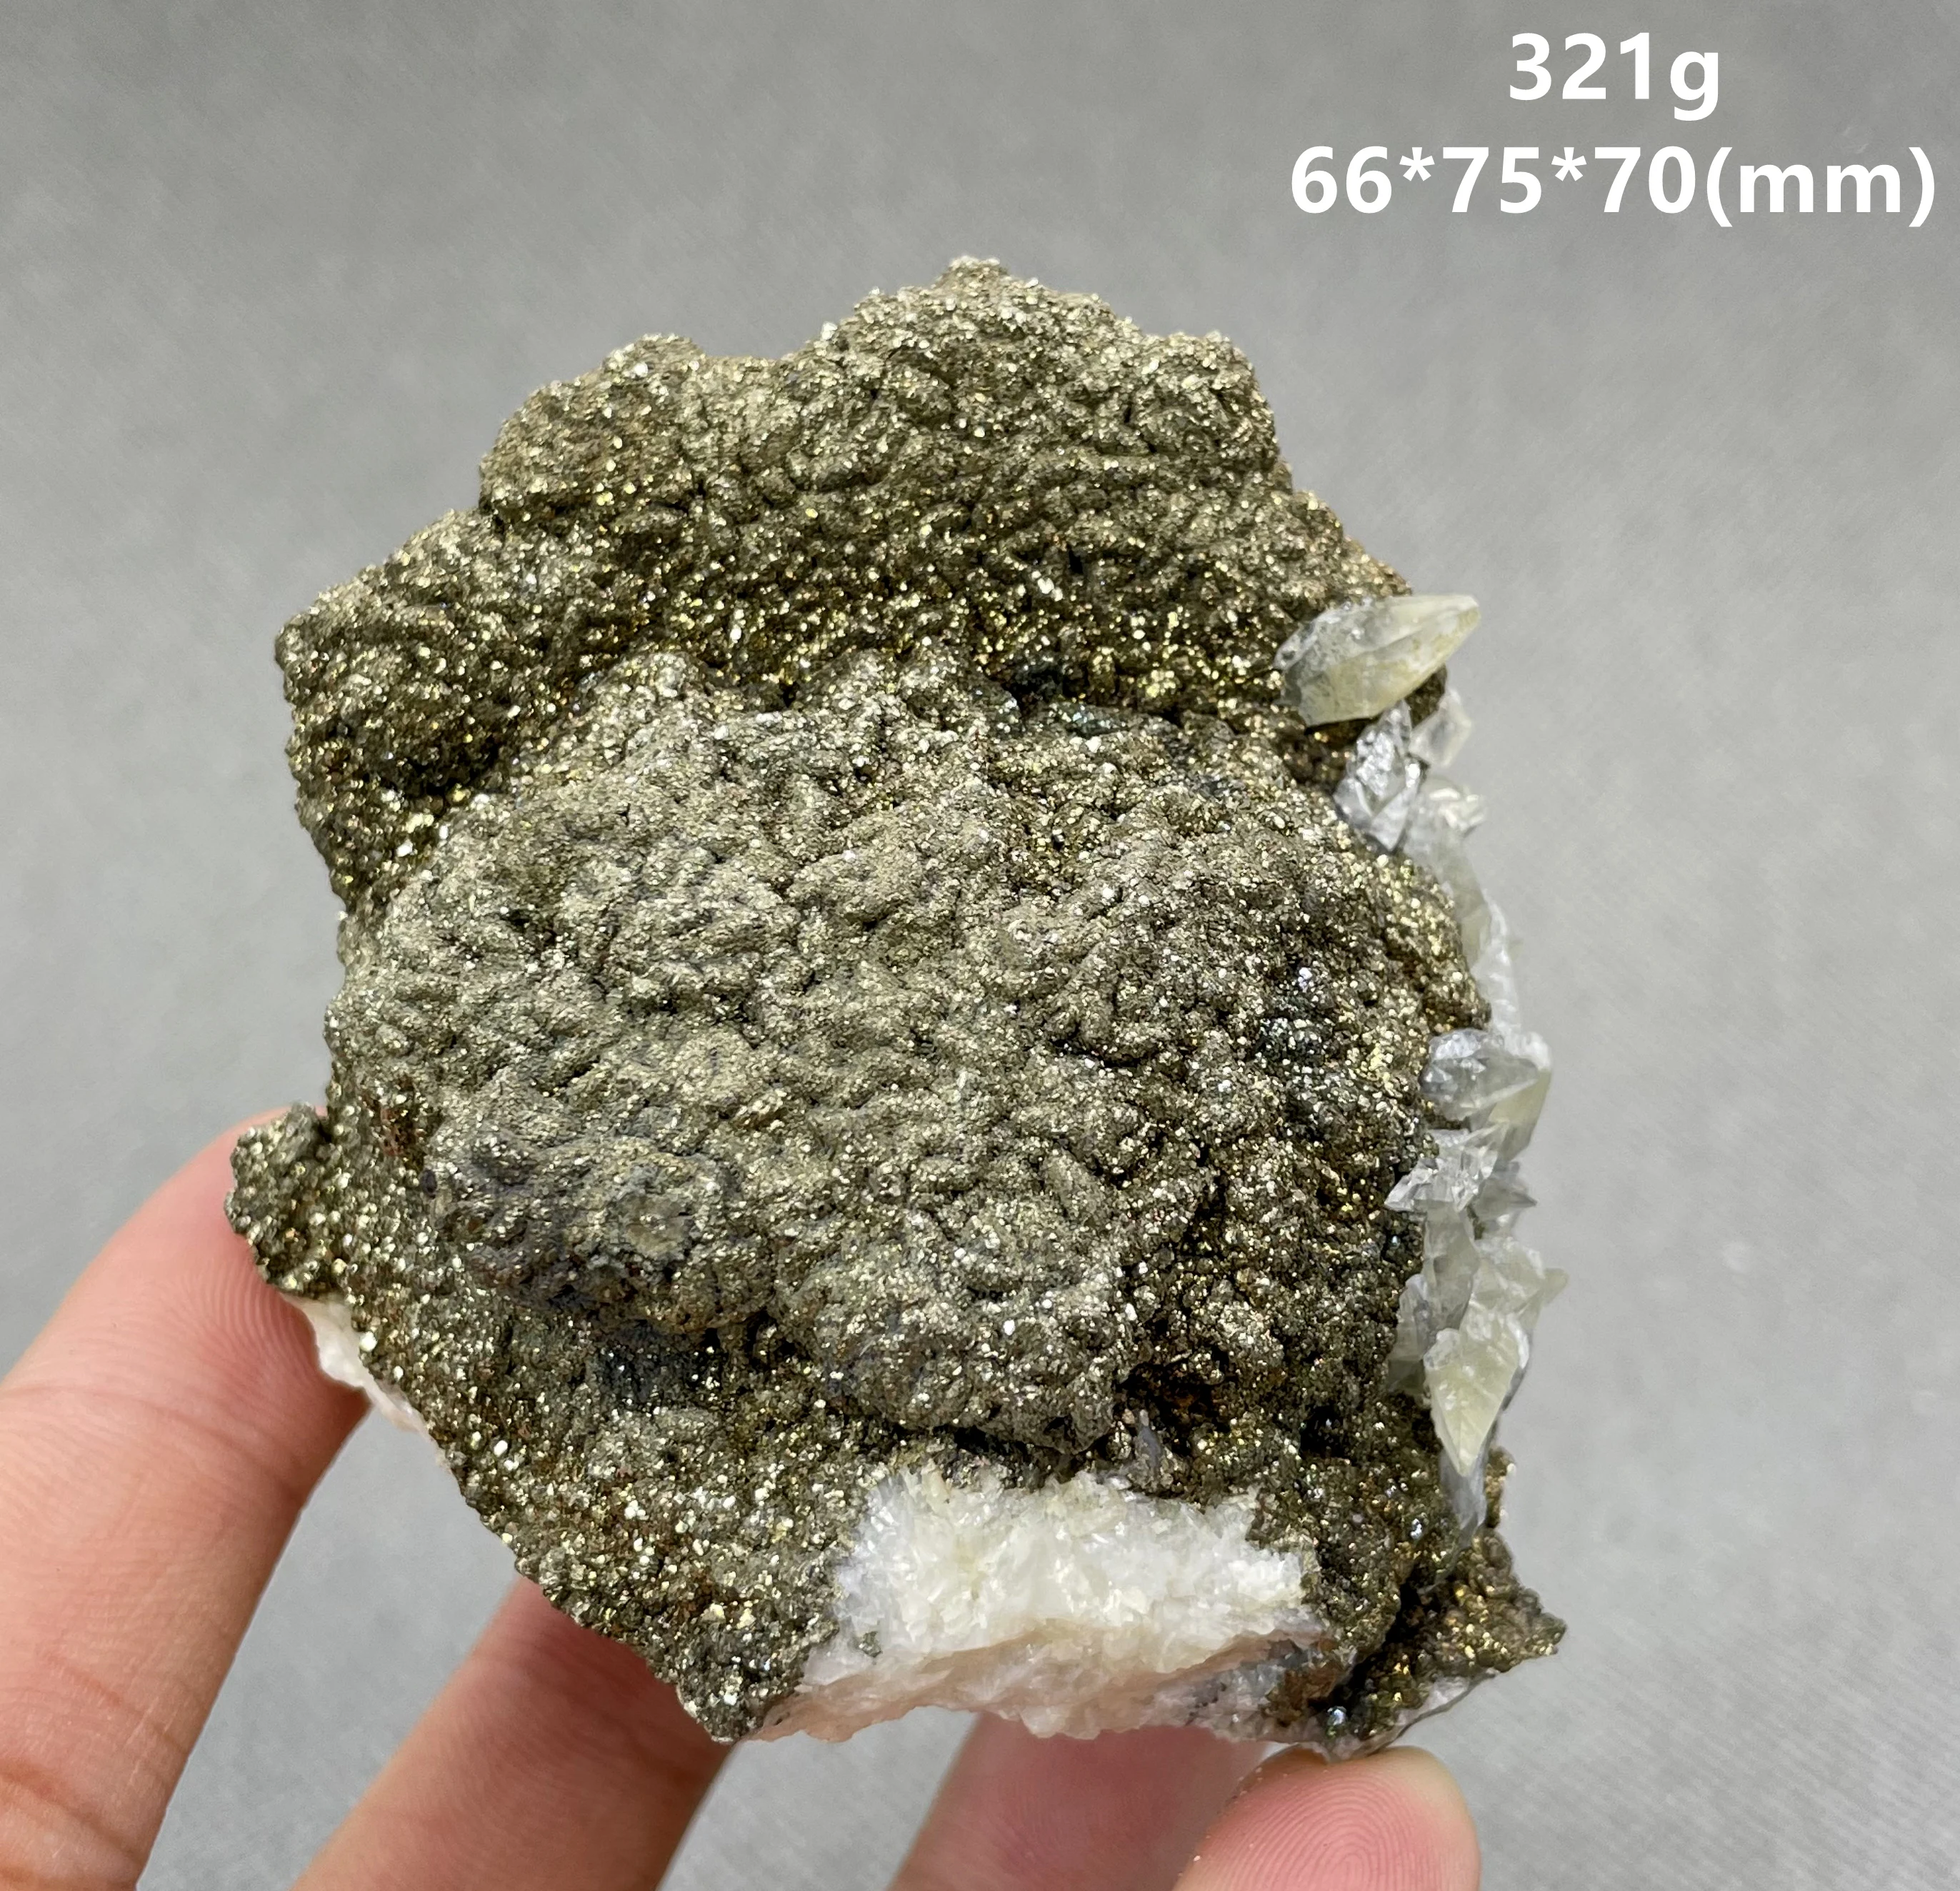 

NEW! 321g natural pyrite and fluorescent calcite symbiotic mineral specimen stones and crystals healing crystals quartz